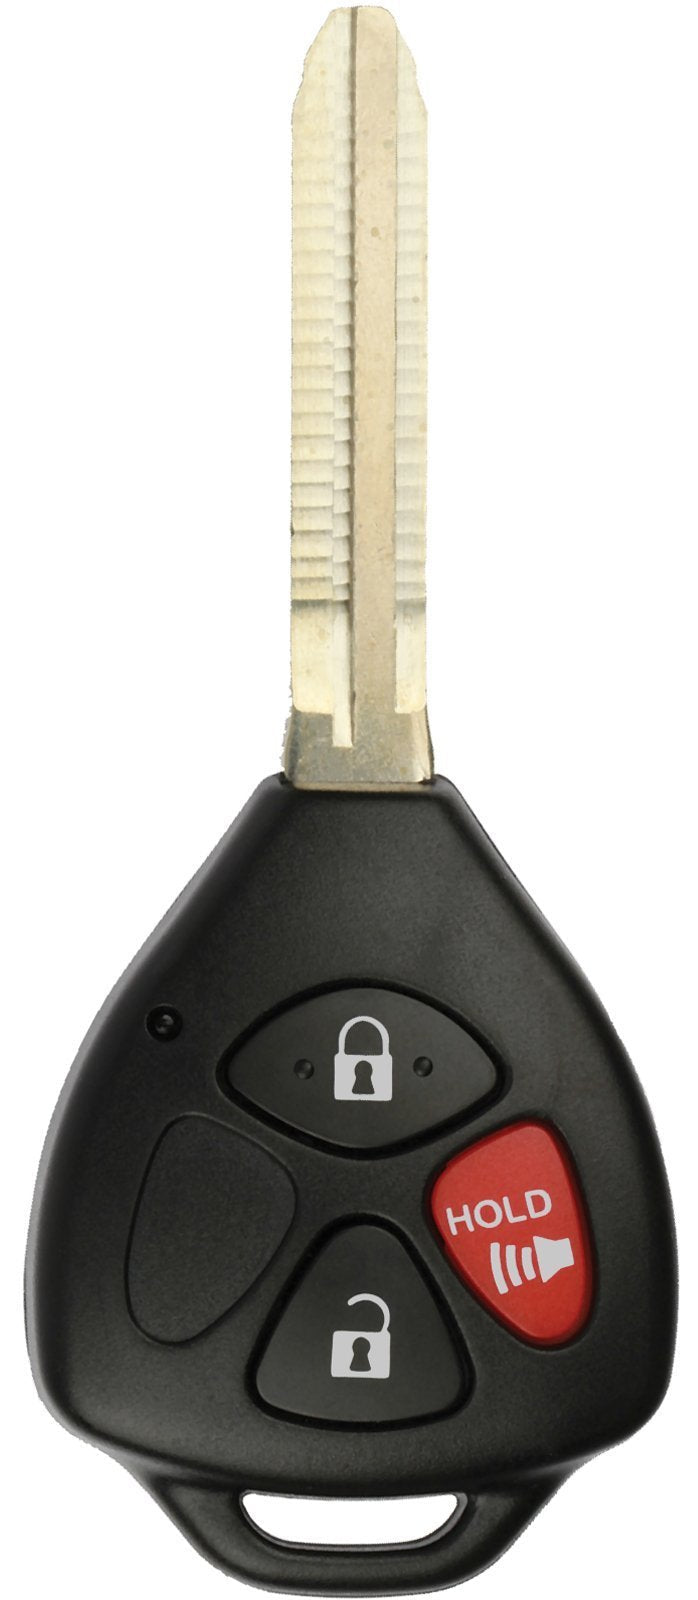  [AUSTRALIA] - KeylessOption Keyless Entry Remote Control Car Key Fob Replacement for HYQ12BBY G Chip black